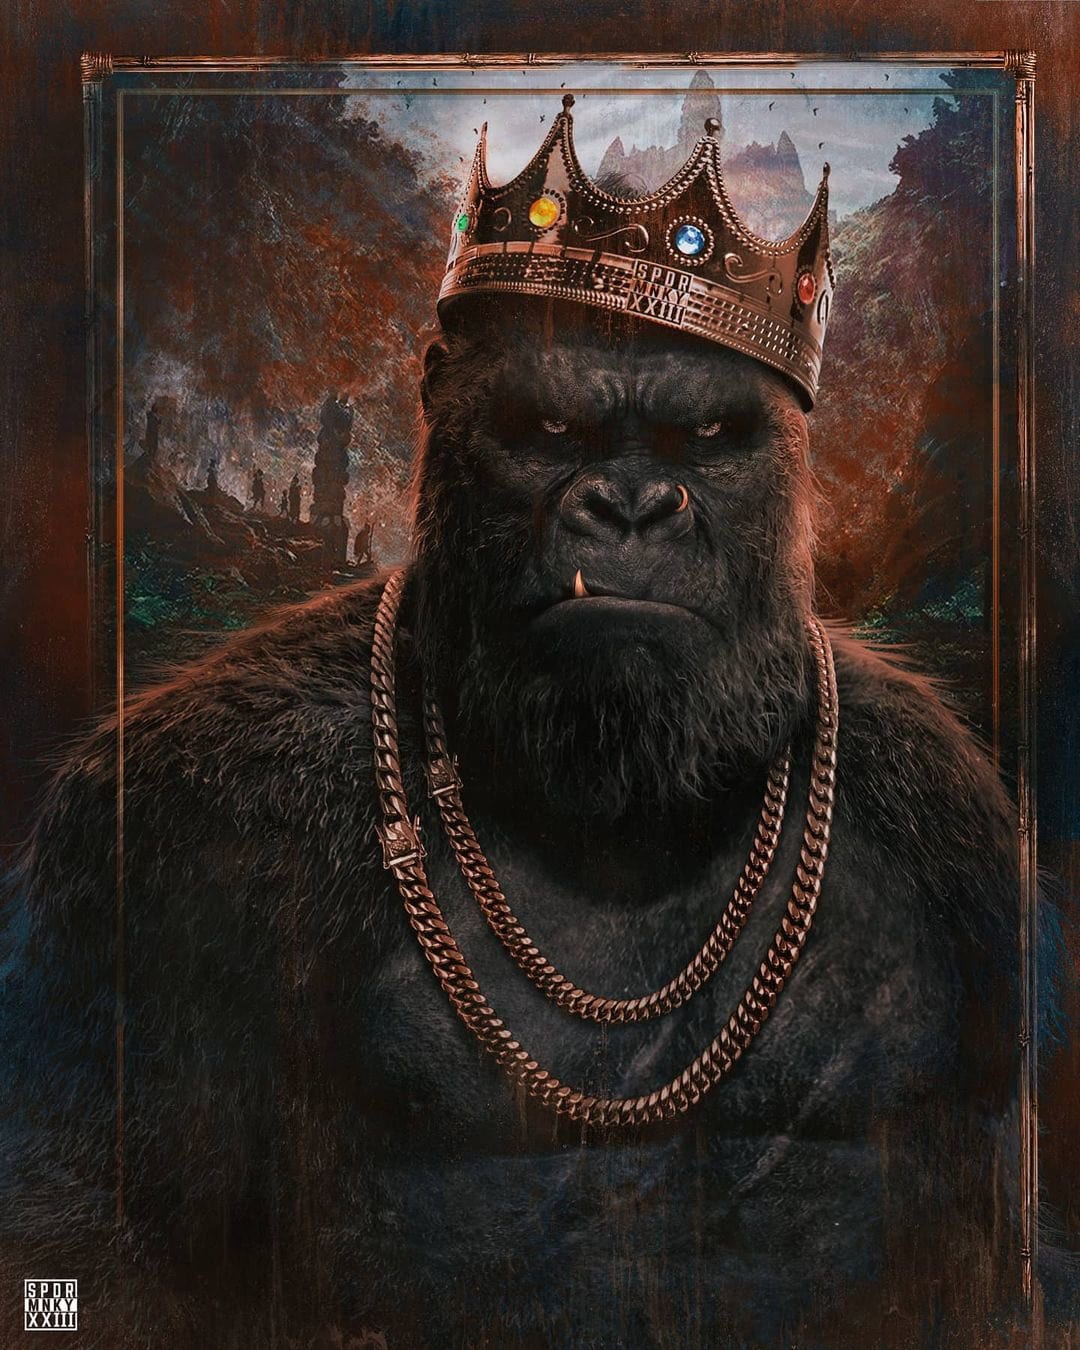 Godzilla vs Kong: due nuovi artwork del monster movie